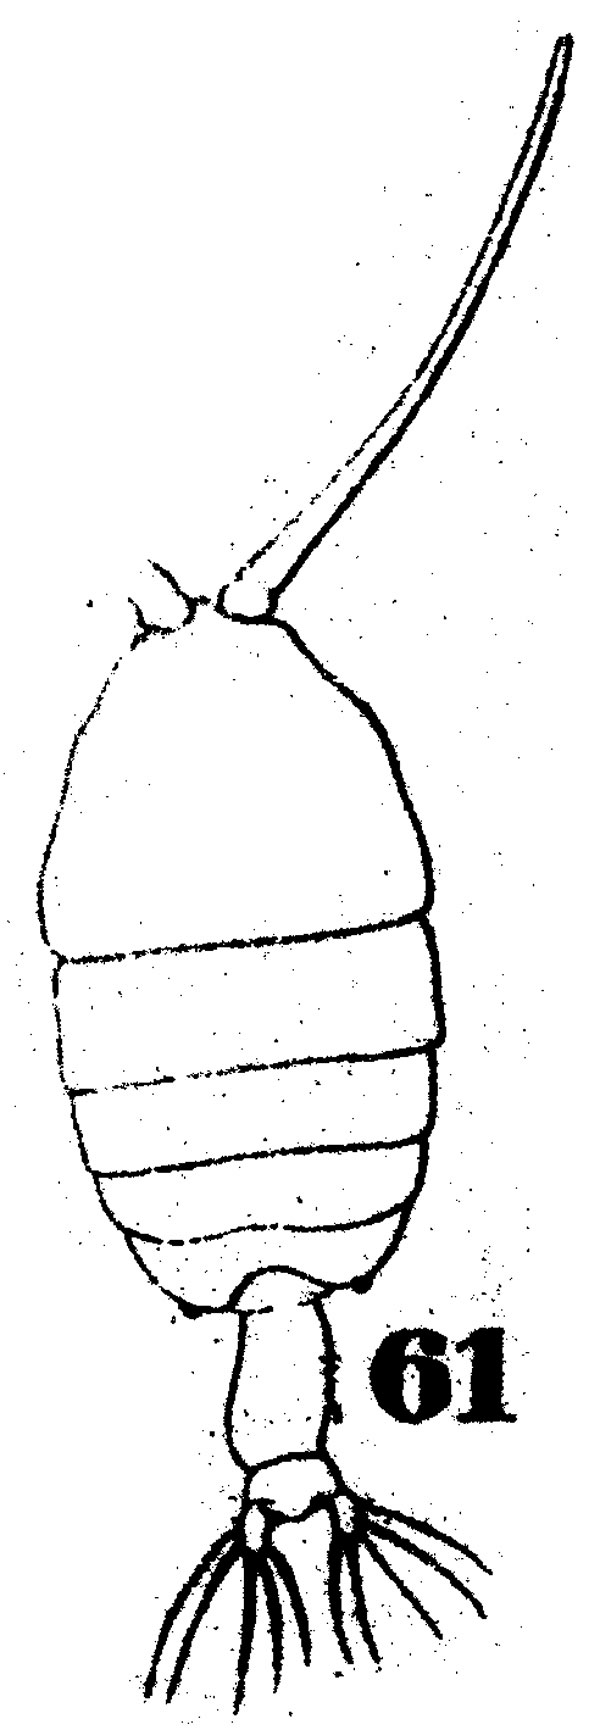 Espce Pontellopsis tenuicauda - Planche 3 de figures morphologiques